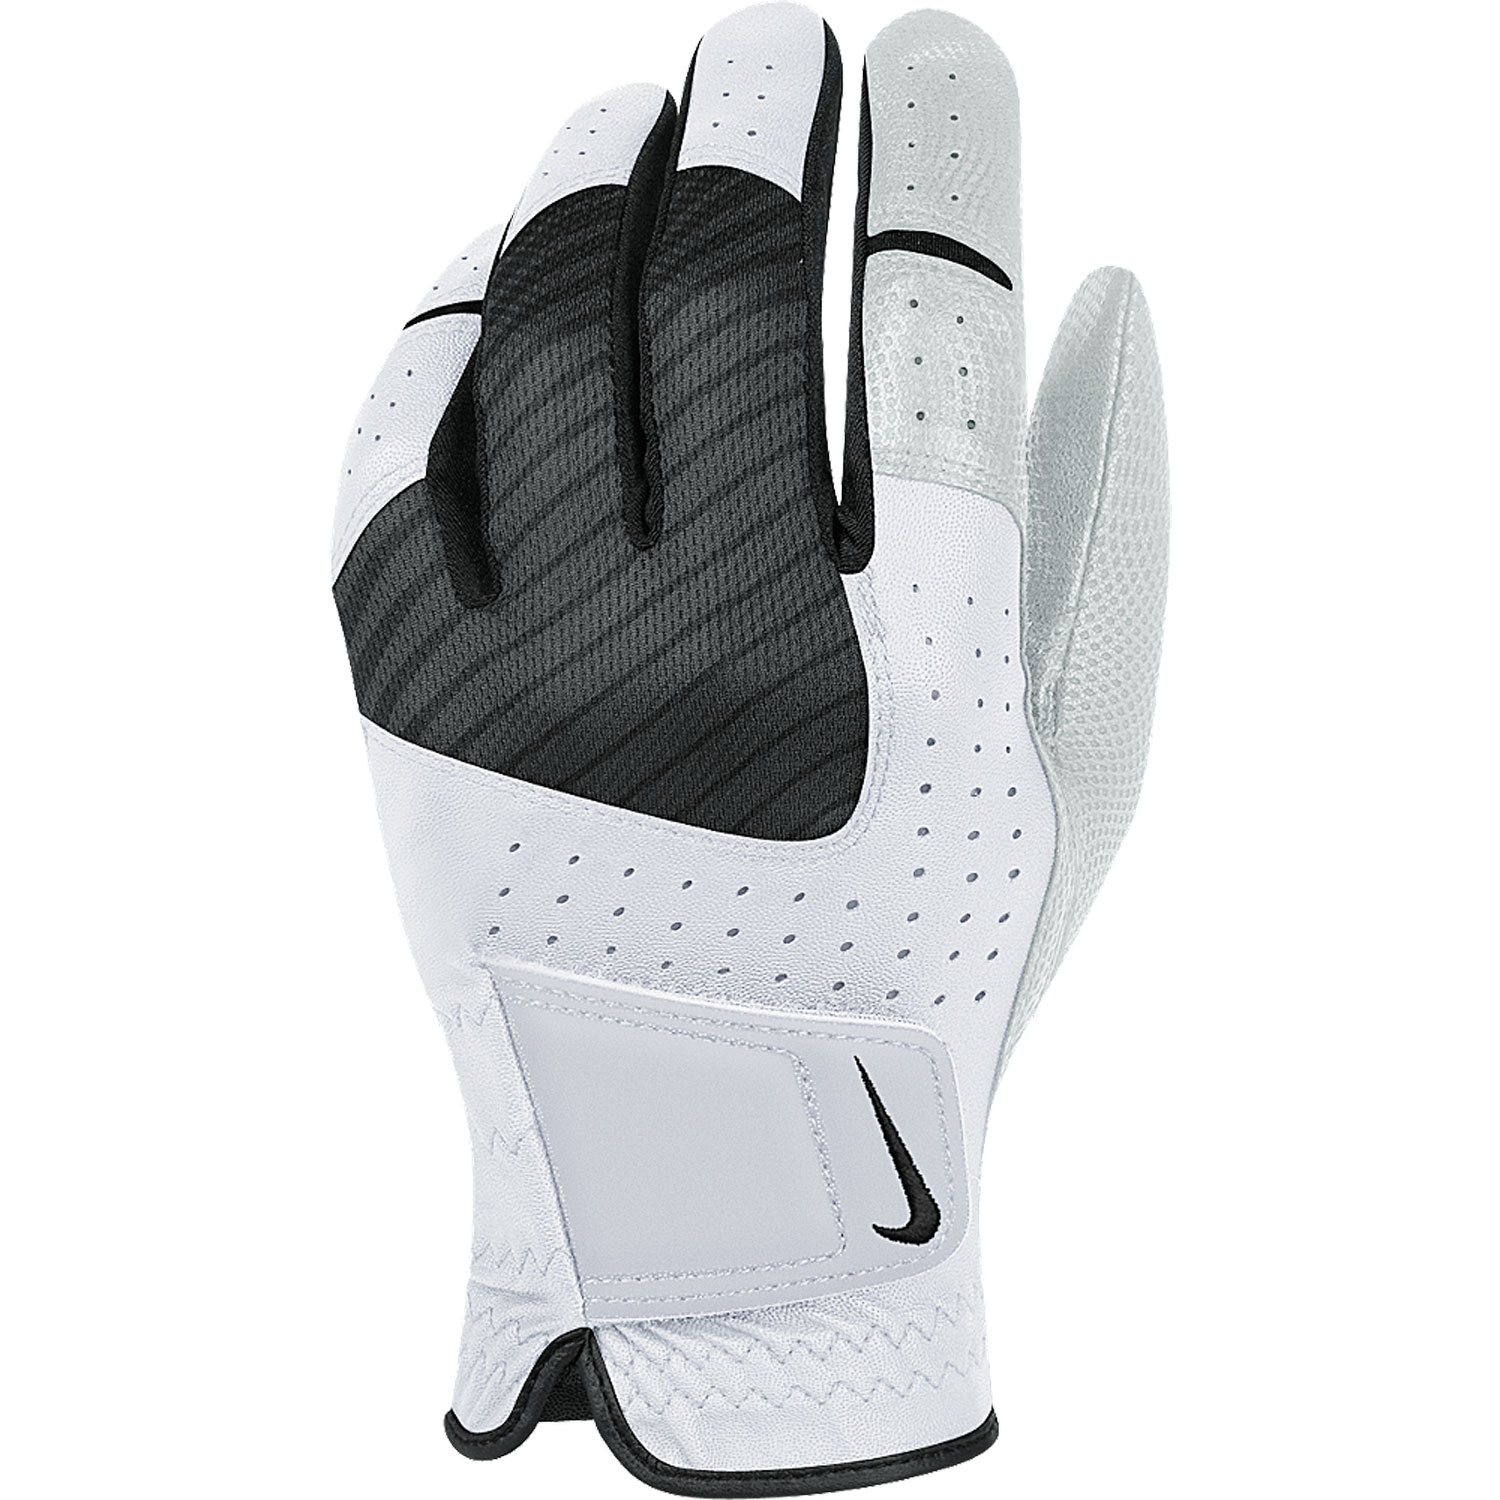 Tech Flow Golf Glove Black/White-Volt Male